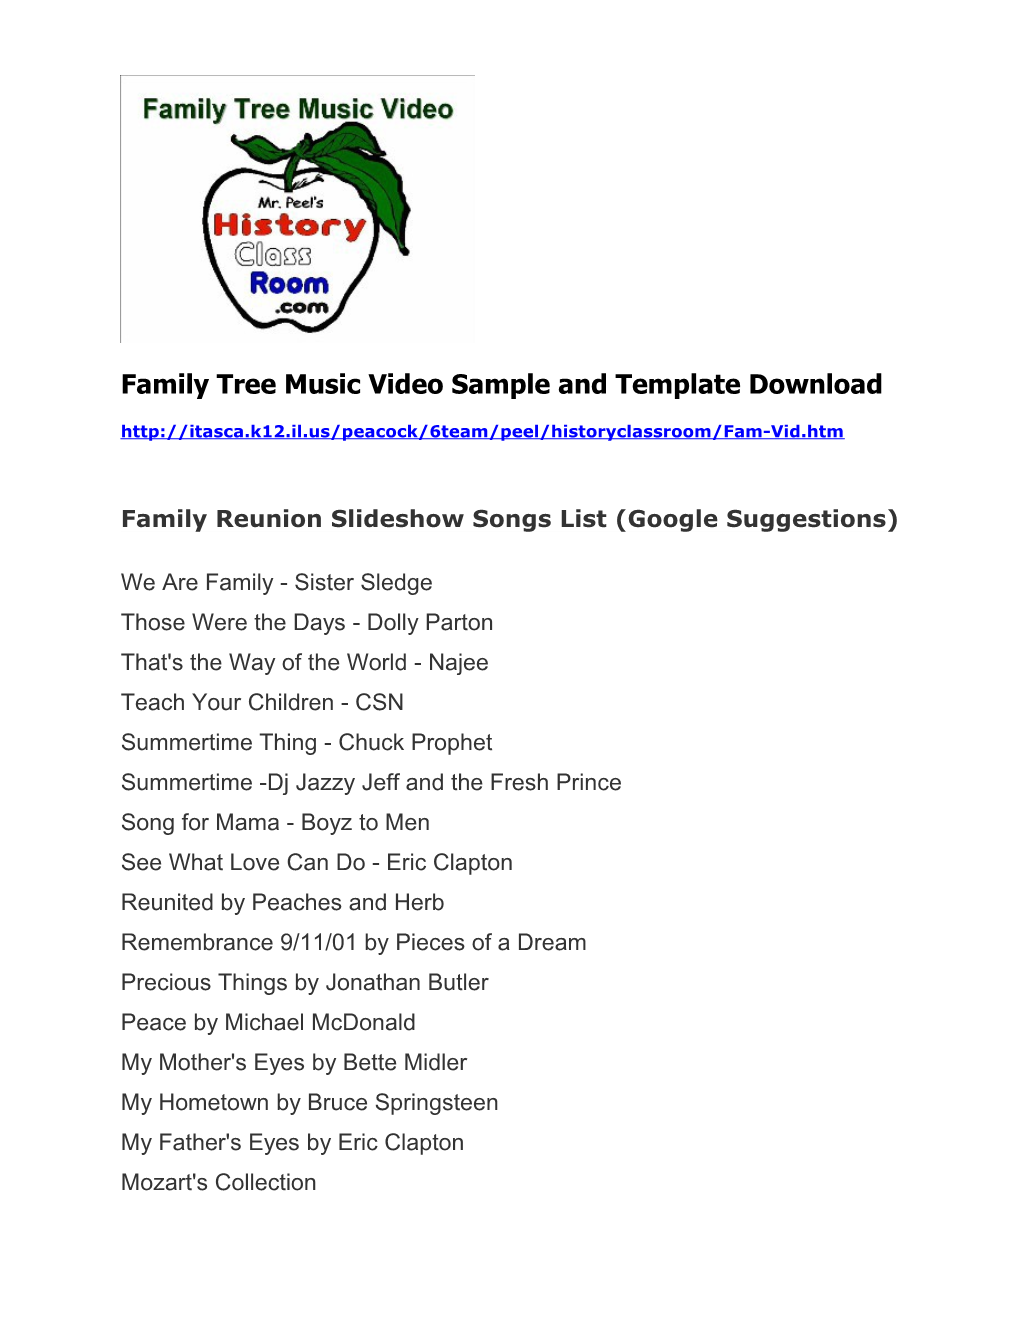 Family Reunion Slideshow Songs List